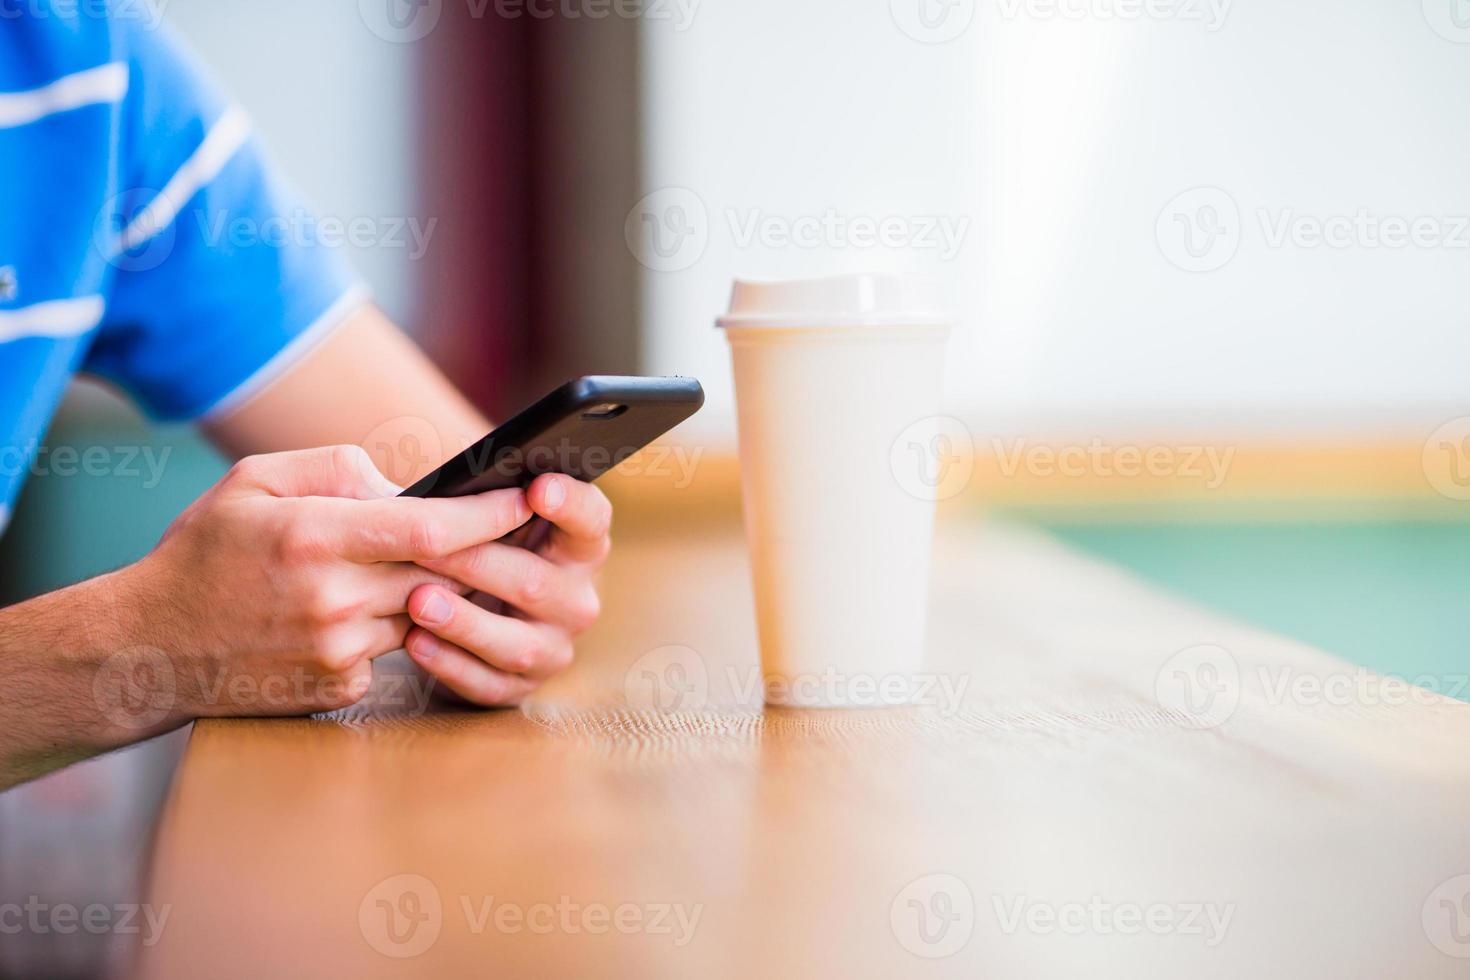 detailopname van mannetje handen Holding mobiele telefoon en klasse van koffie in cafe. Mens gebruik makend van mobiel smartphone foto